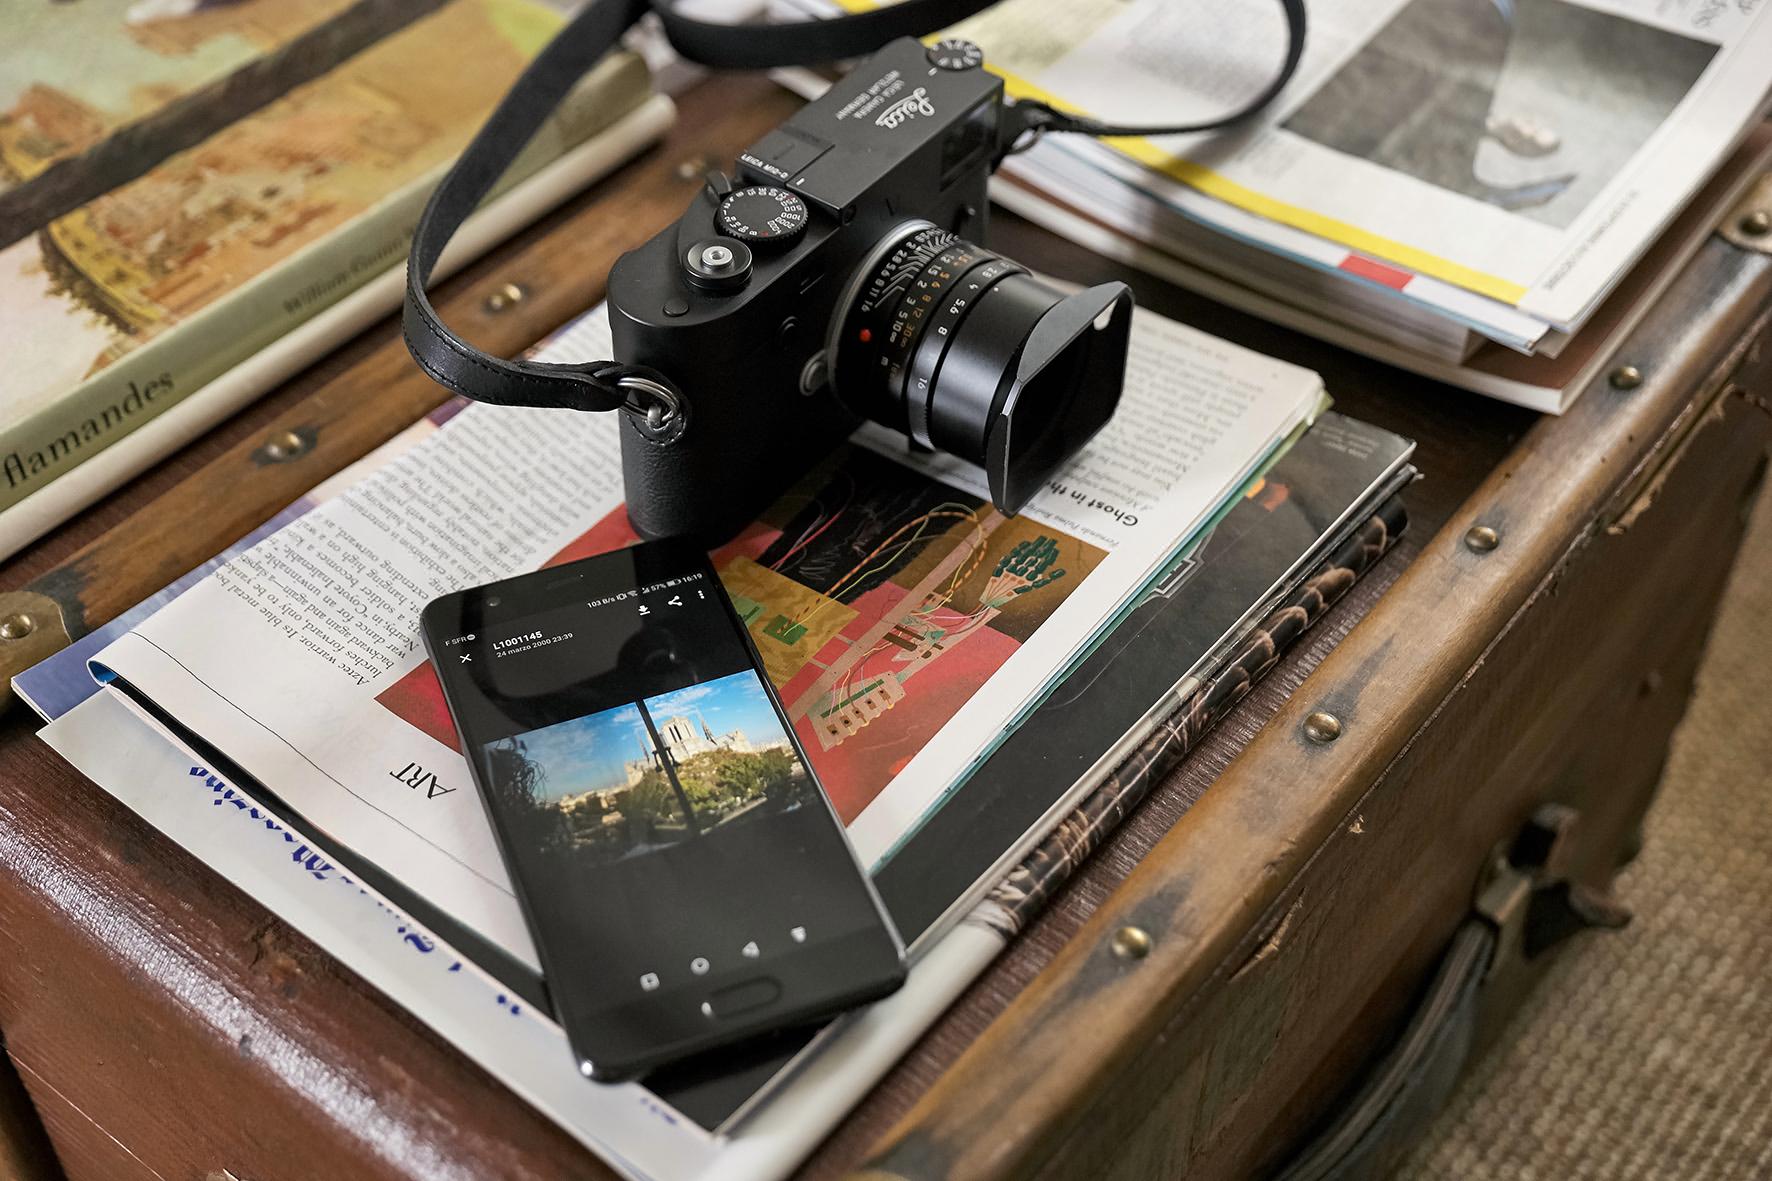 Leica M10-D the screenless digital